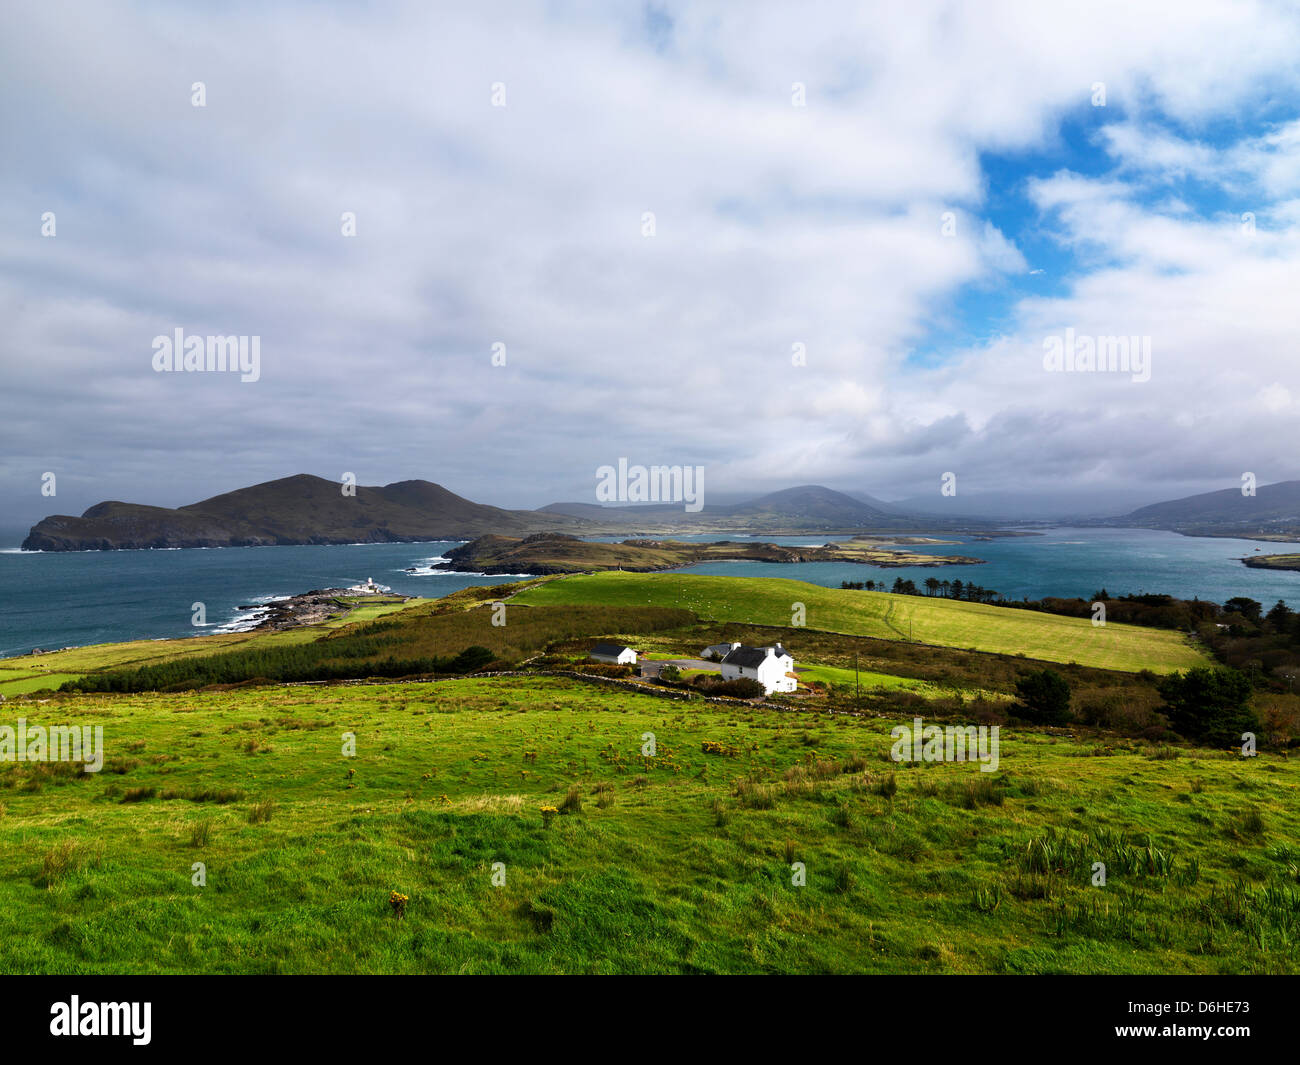 Valencia Island looking over Beginish island County Kerry Ireland. Stock Photo